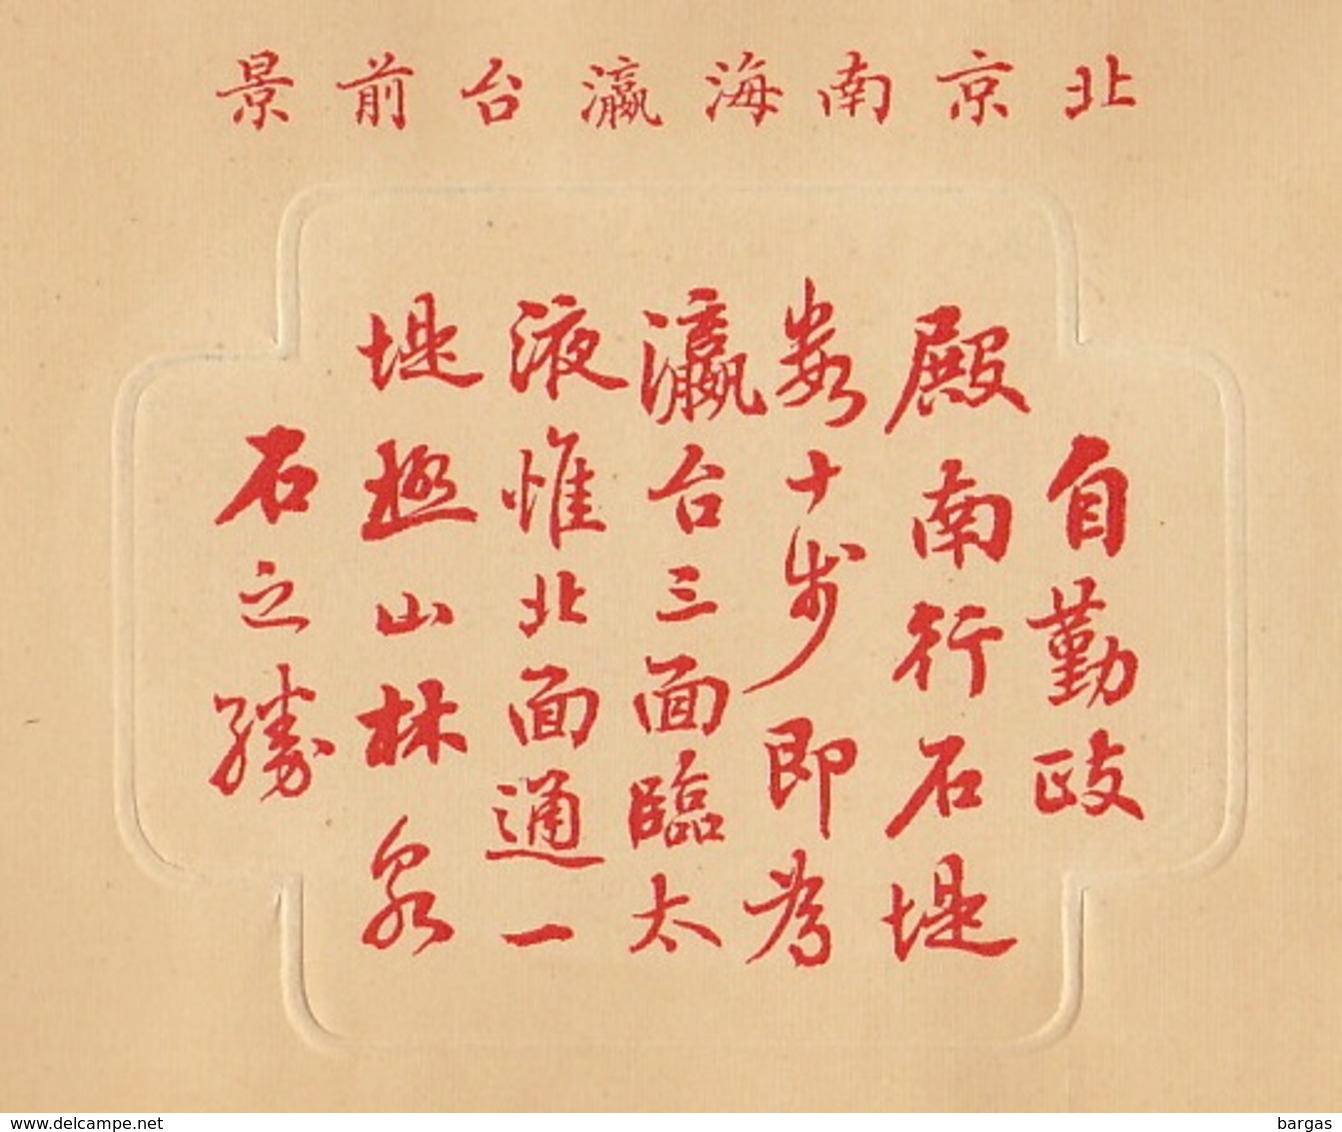 Planche Vers 1900 Lithographie Chine White Pagoda Peking China Chinois - Scherenschnitte